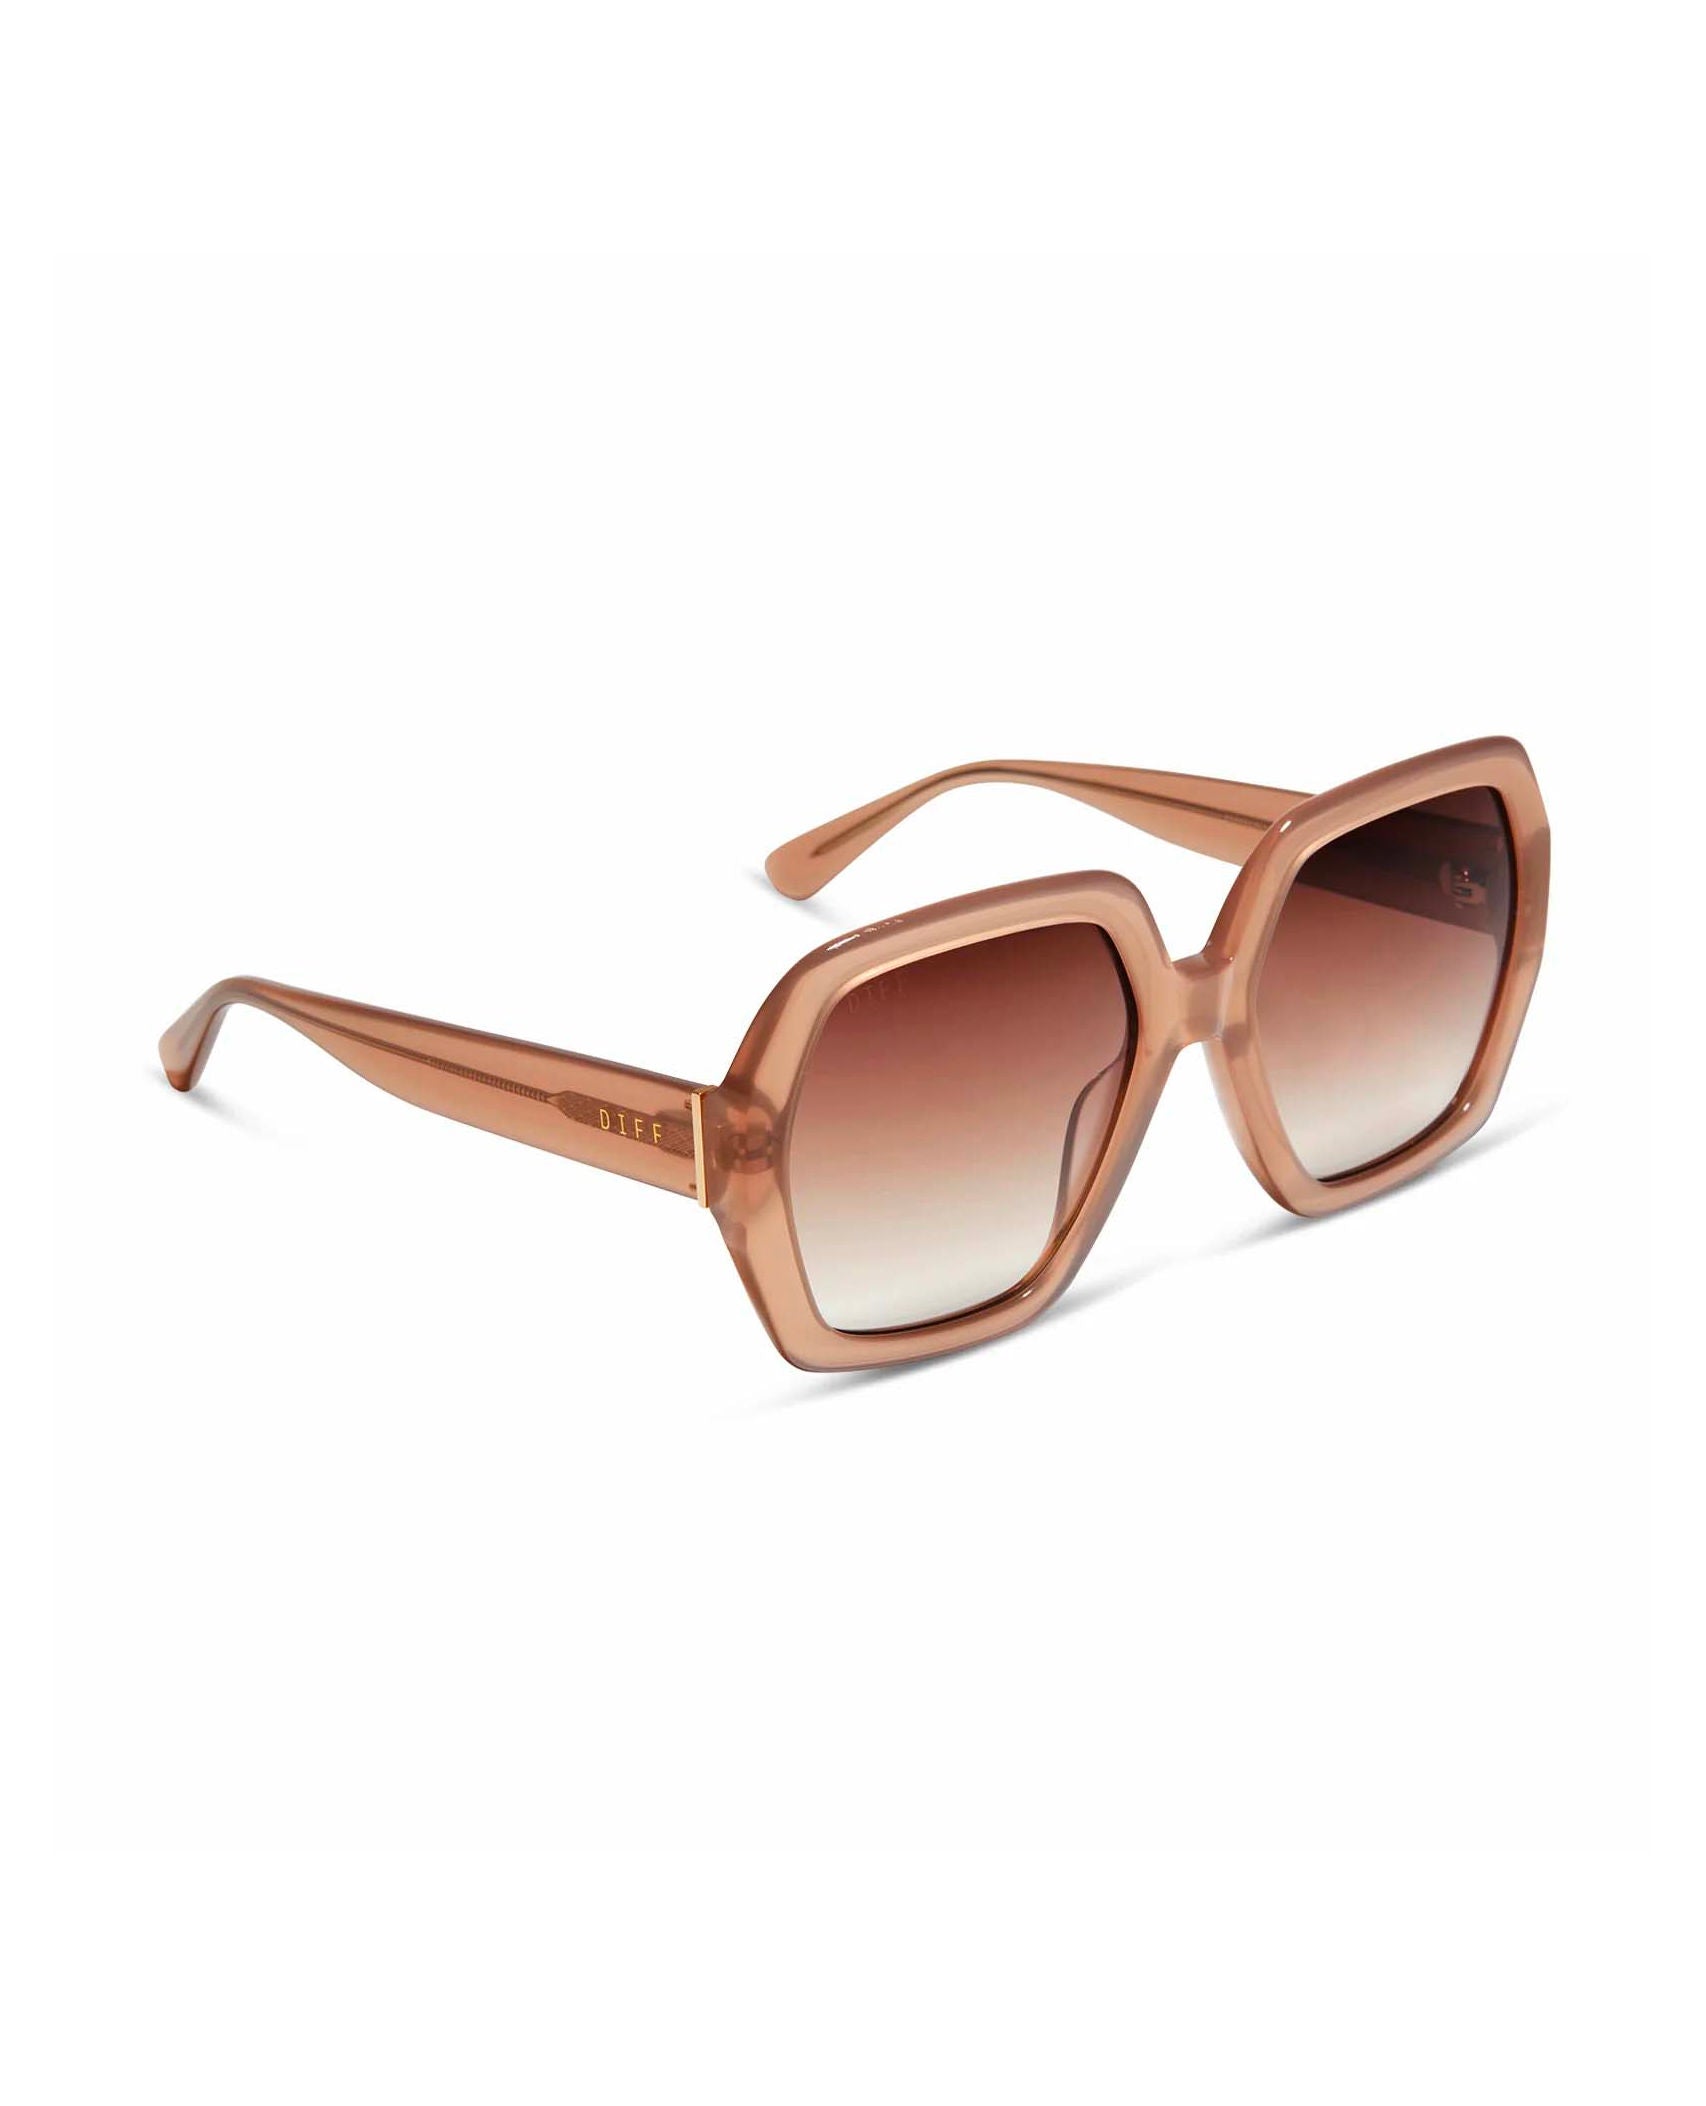 Nola Square Sunglasses Warm Taupe Brown Gradient